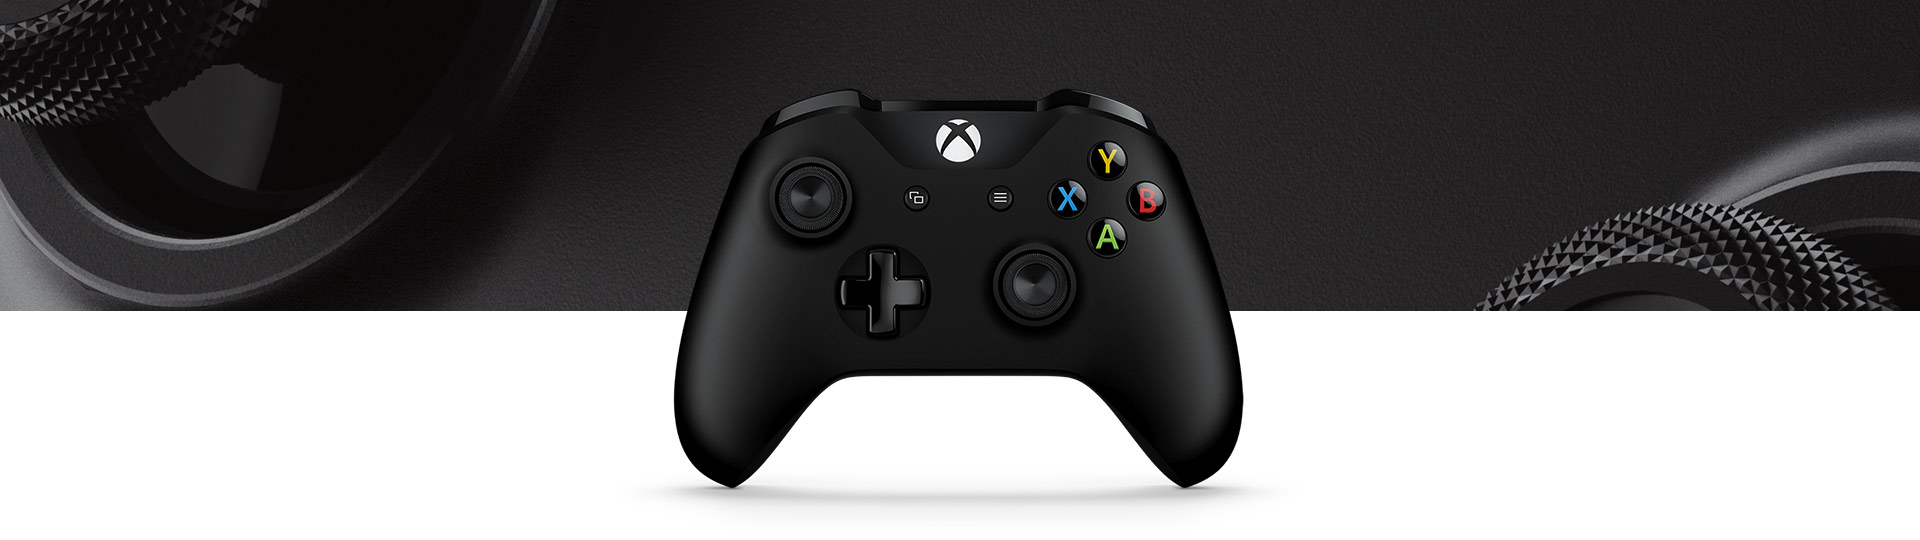 Xbox ワイヤレス コントローラー ブラック Xbox